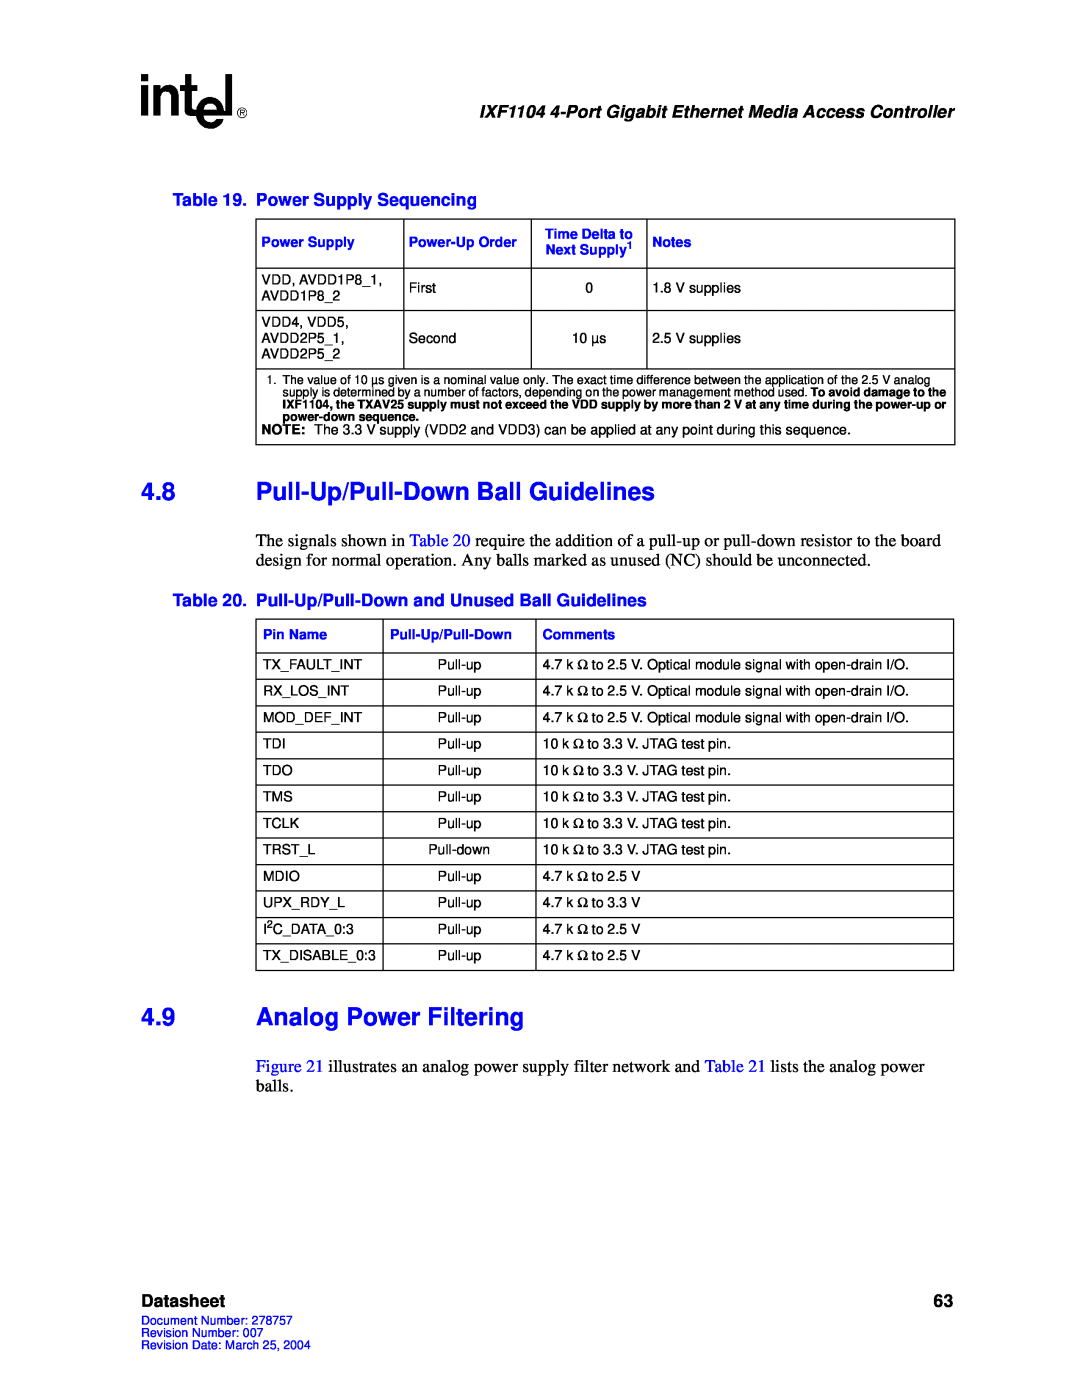 Intel IXF1104 manual 4.8Pull-Up/Pull-DownBall Guidelines, 4.9Analog Power Filtering, Datasheet 